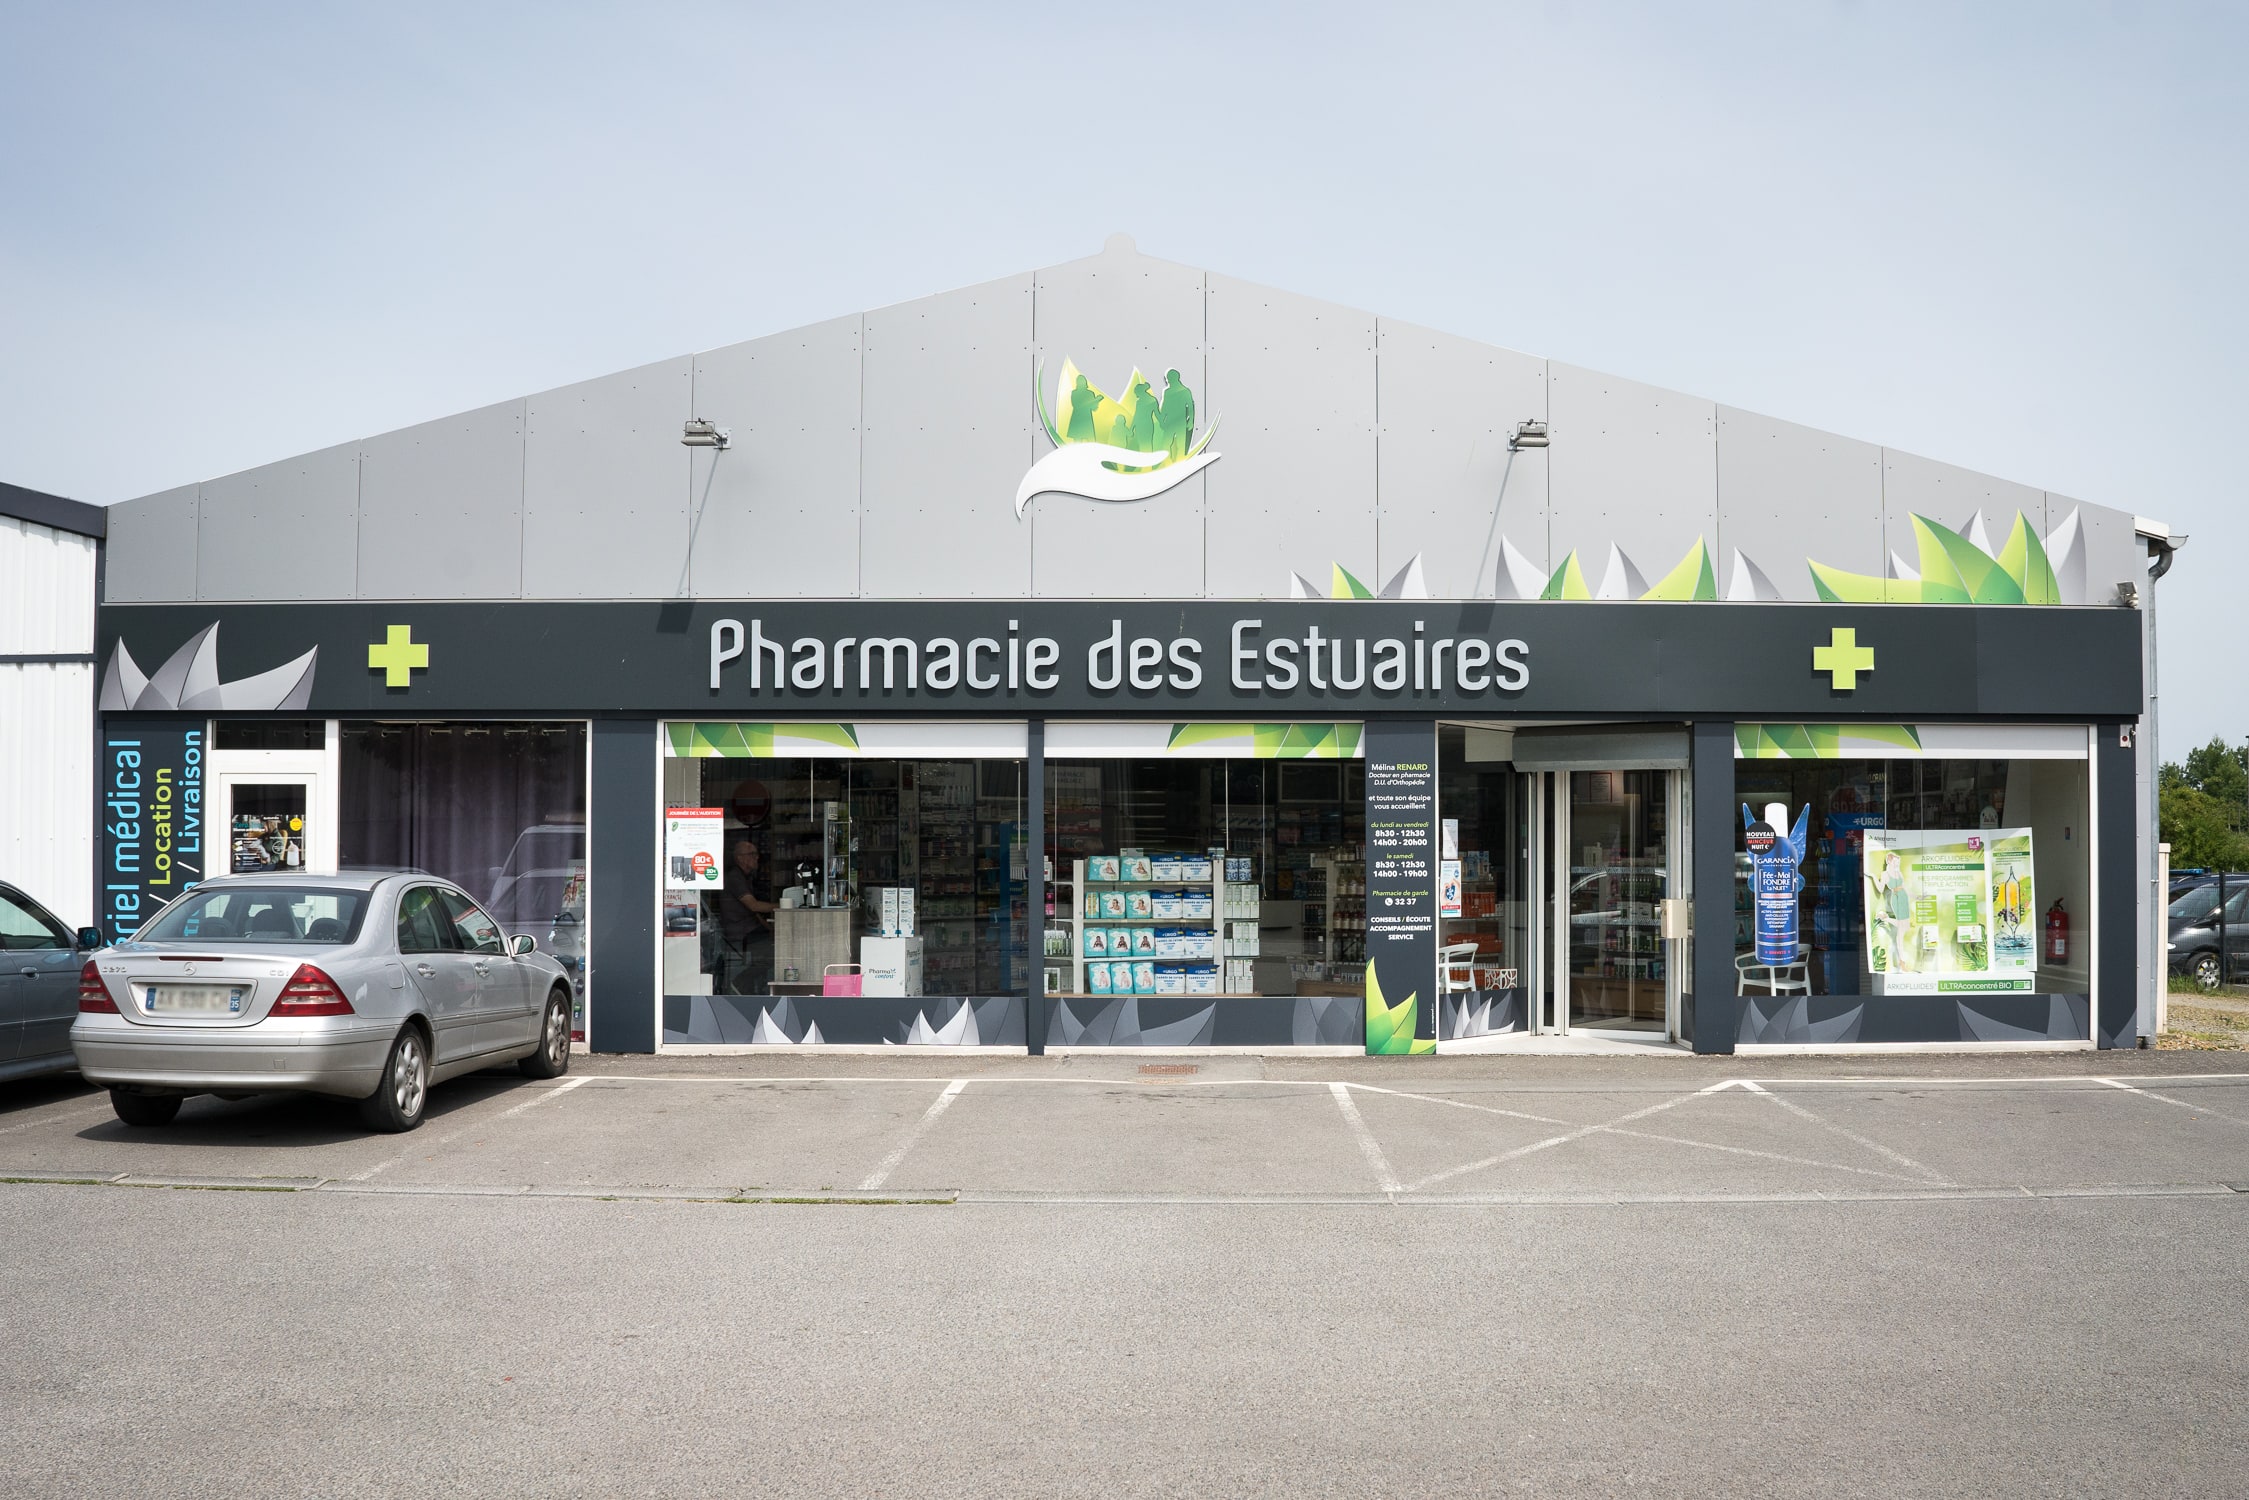 Pharmacie Estuaires Maen roch photo Yves Rousseau 1